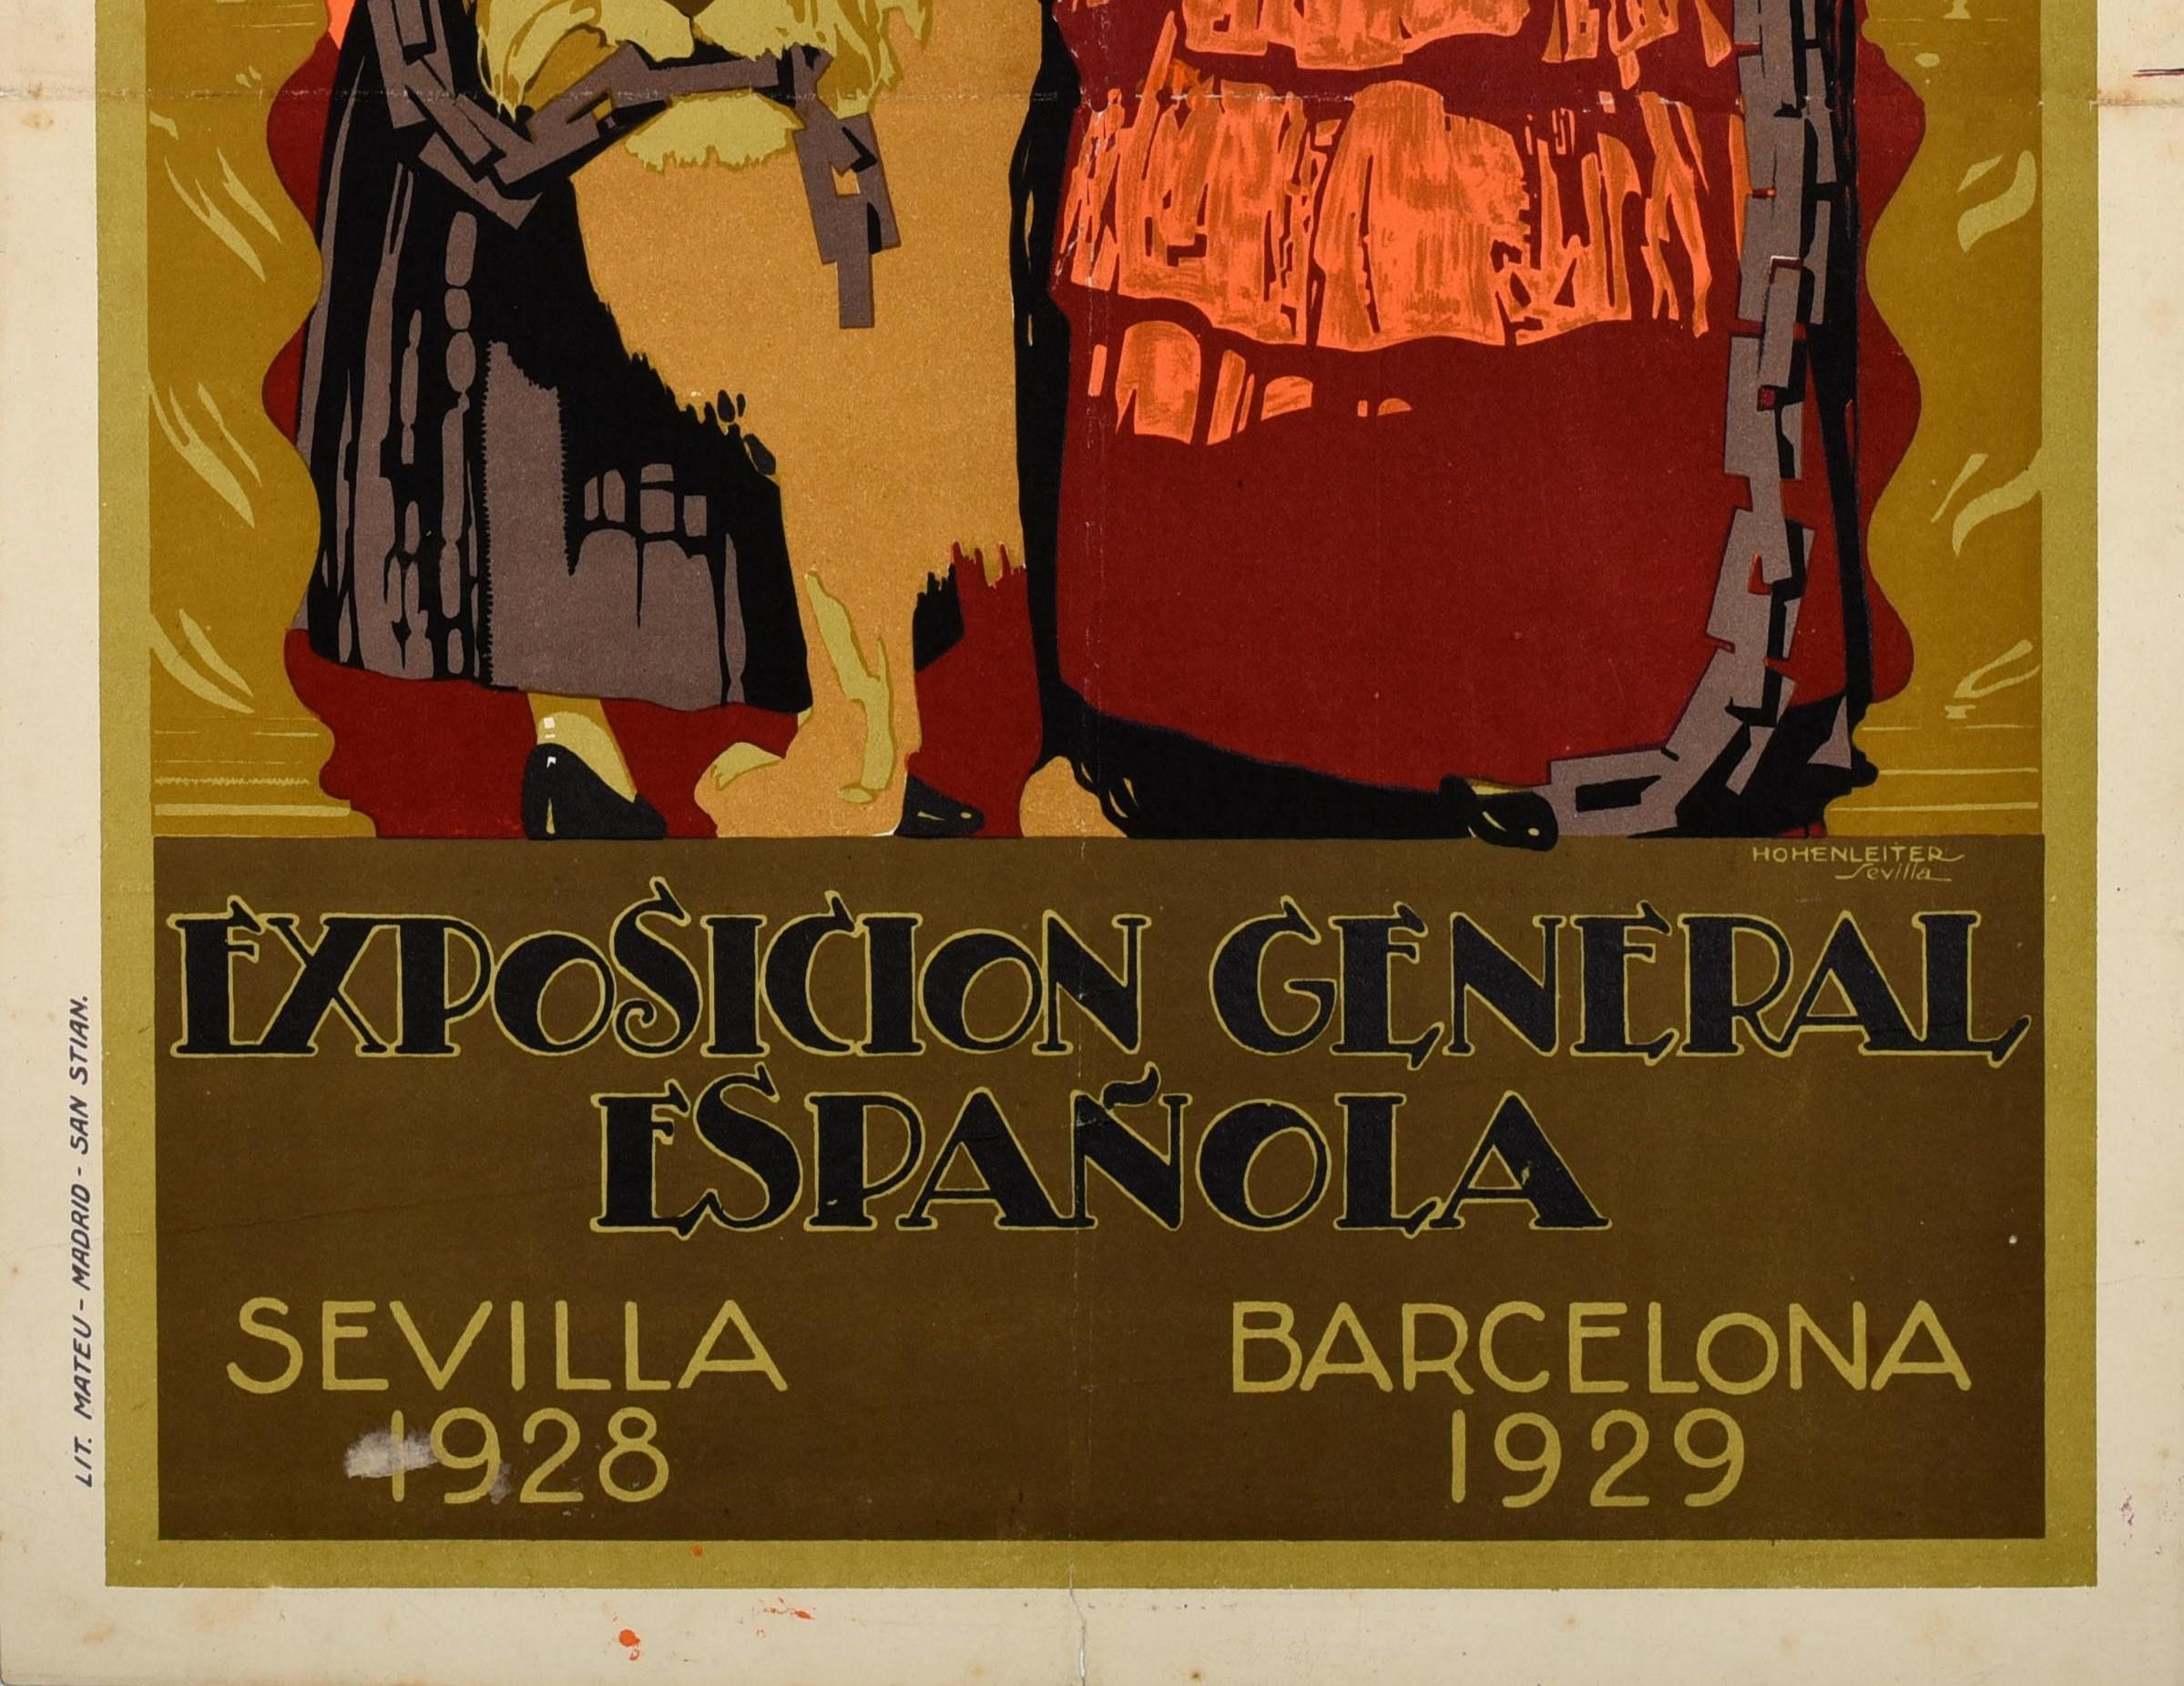 Spanish Original Vintage Exhibition Poster Exposicion General Espanola Sevilla Barcelona